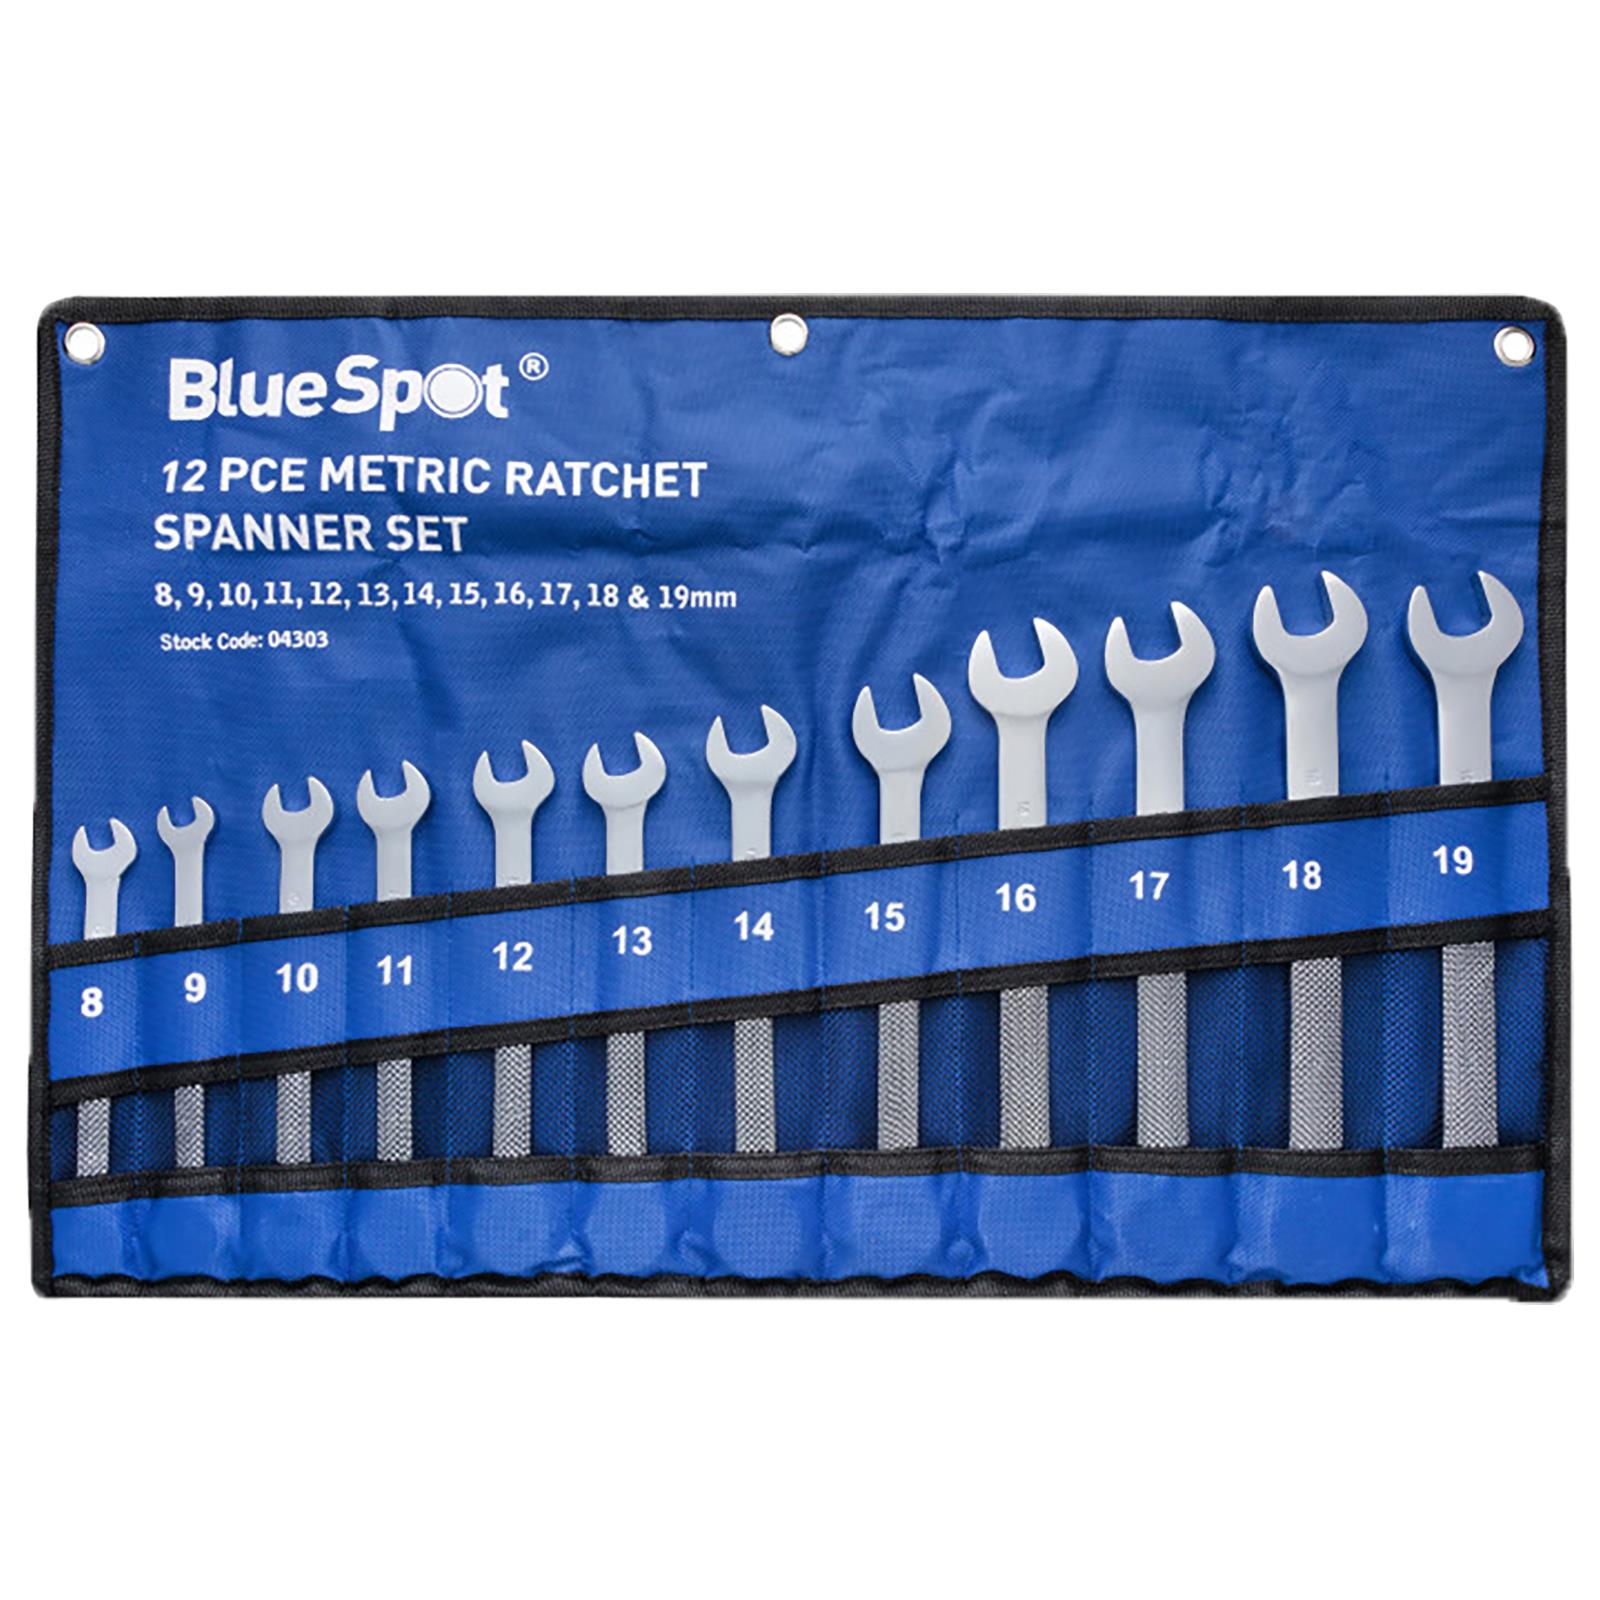 BlueSpot Ratchet Spanner Set 12 Pieces Metric 8-19mm in Tool Roll